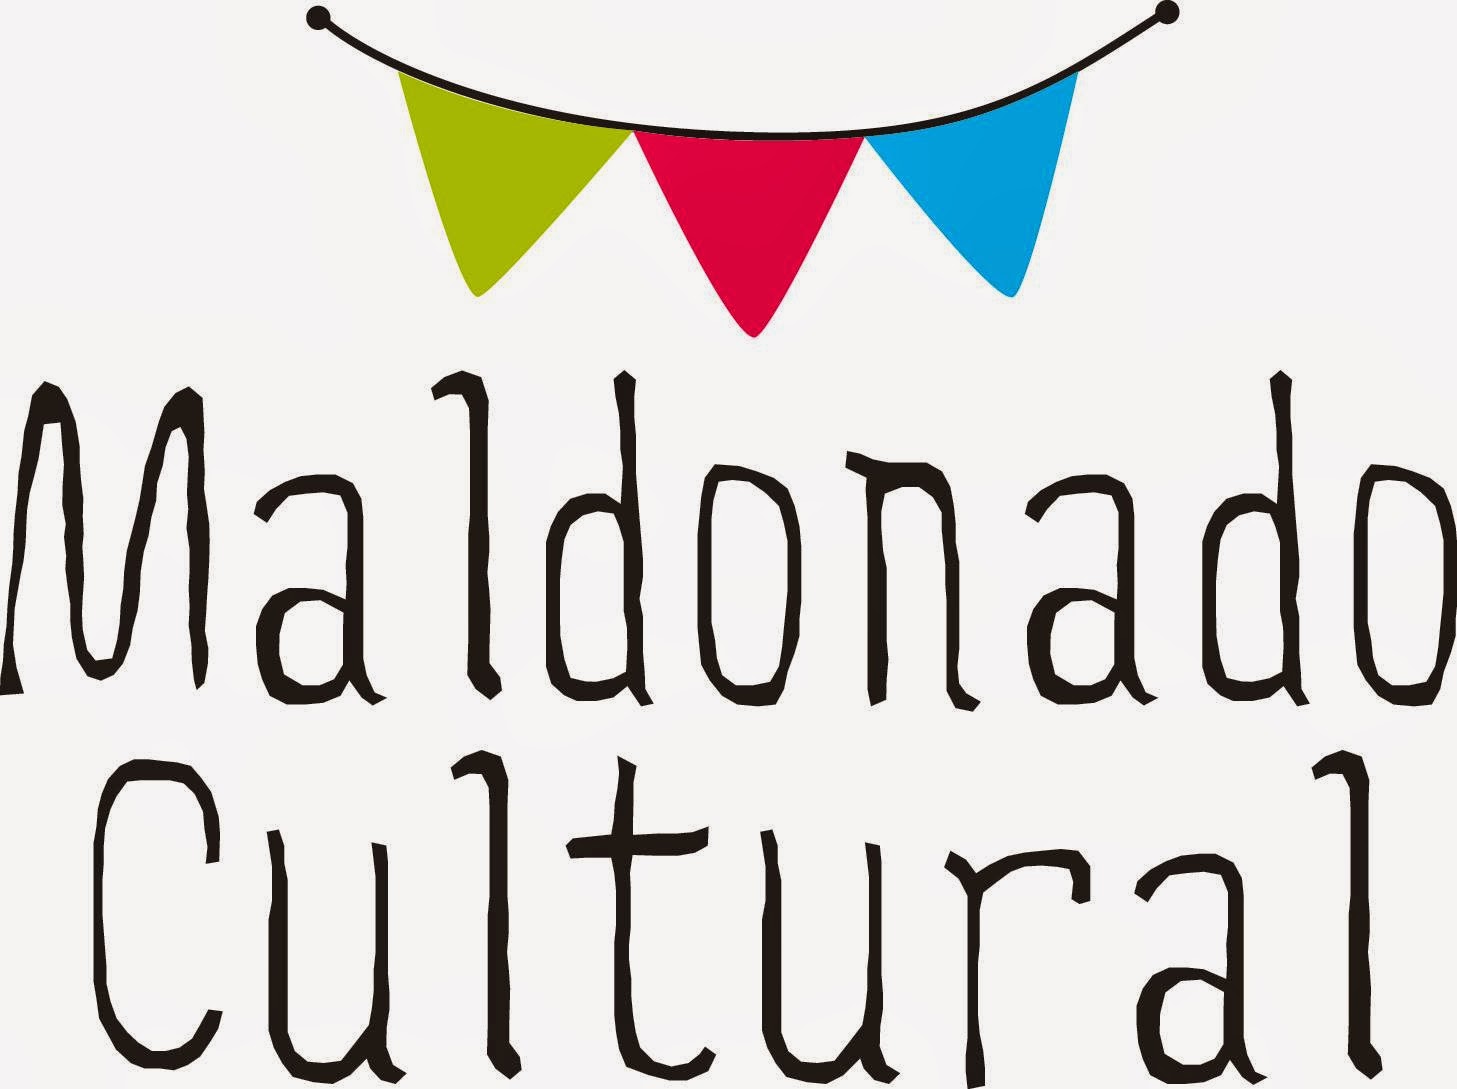 Maldonado Cultural